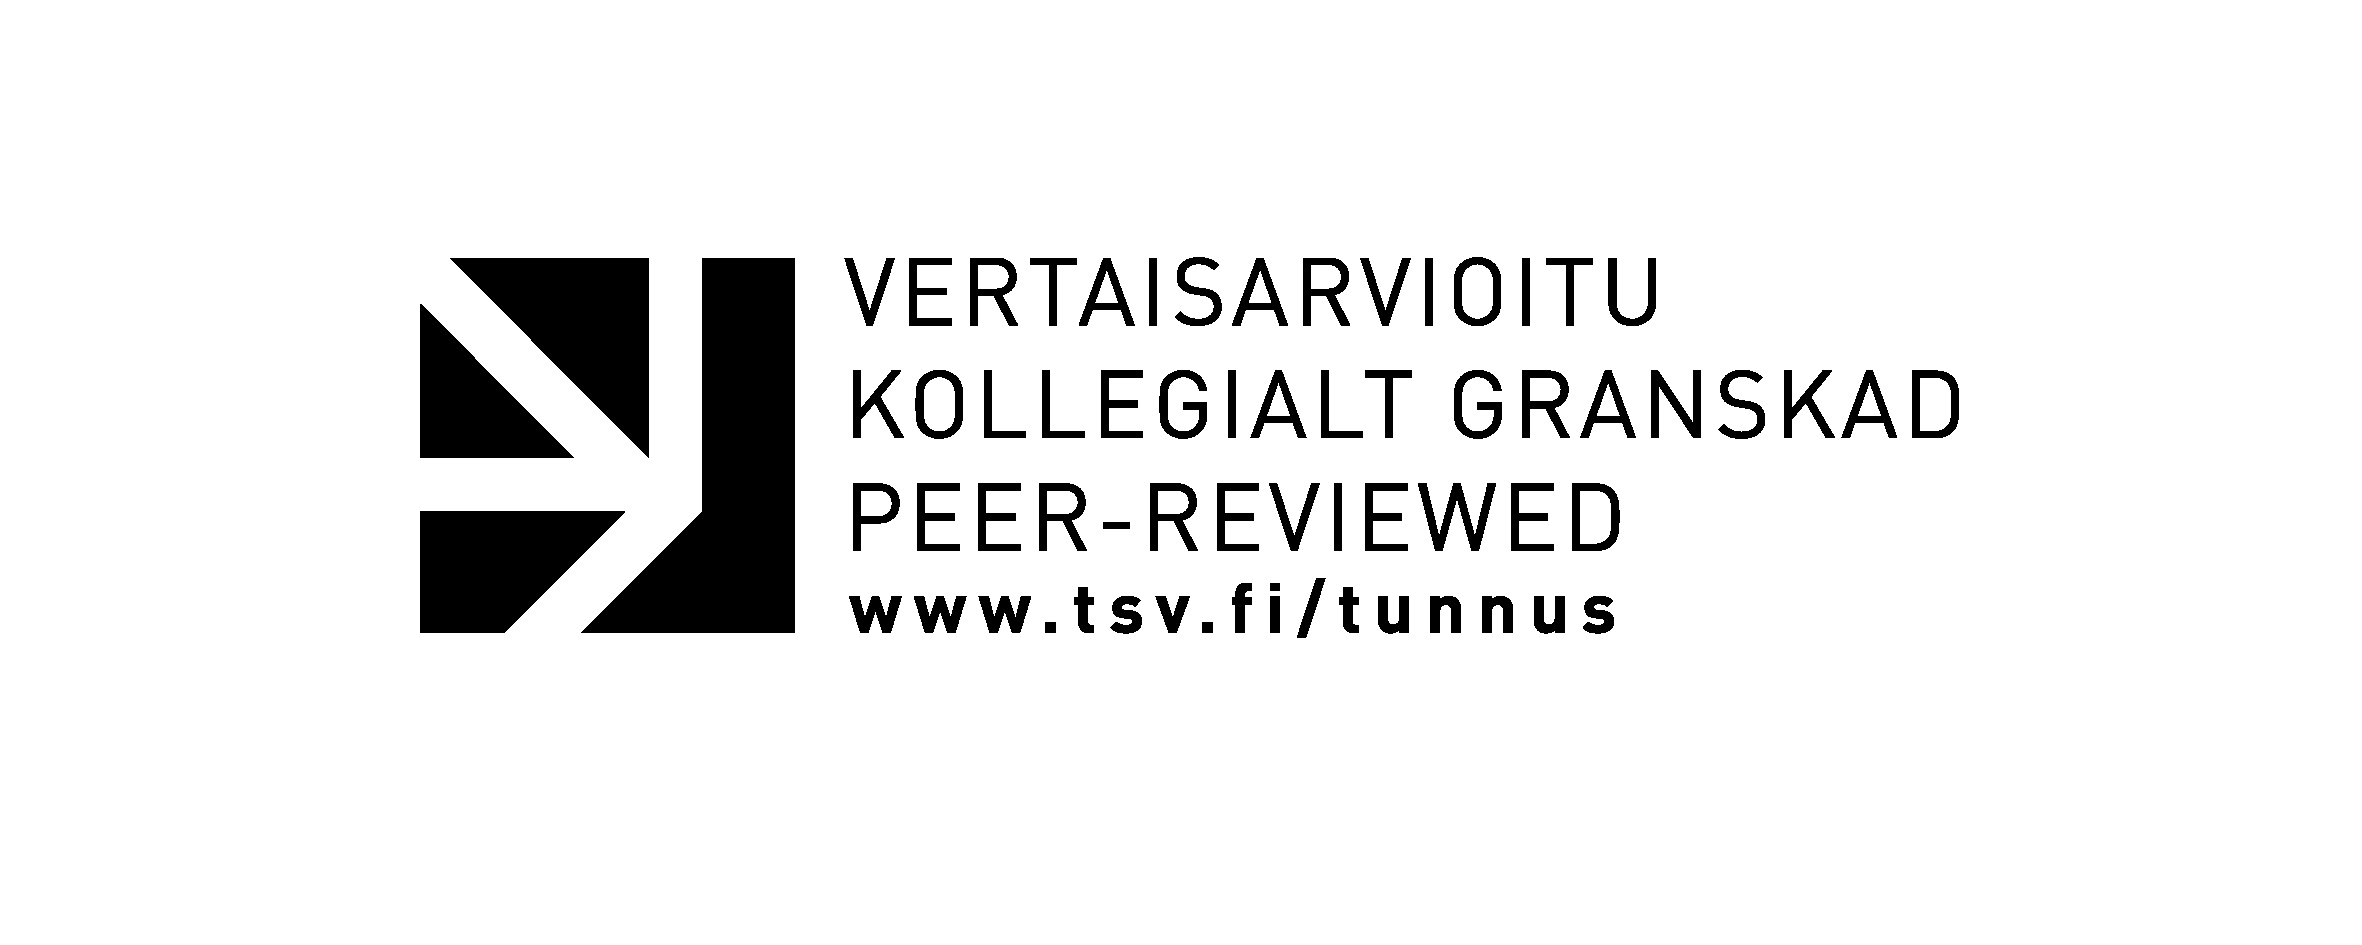 Vertaisarvioitu-tunnus: vertaisarvioitu, kollegialt granskat, peer-reviewed. www.tsv.fi/tunnus